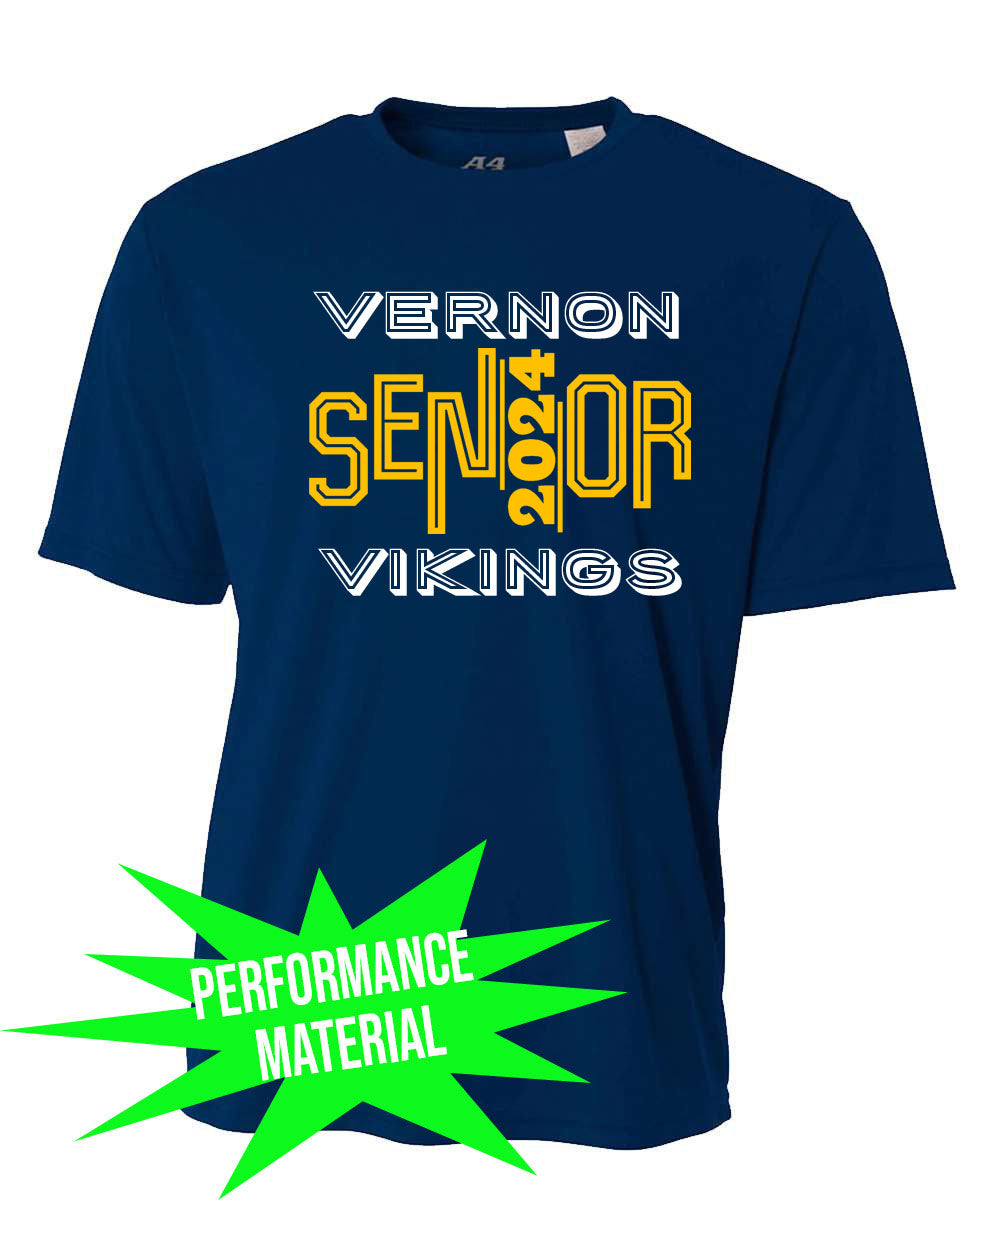 VTHS Design 6 Performance Material T-Shirt